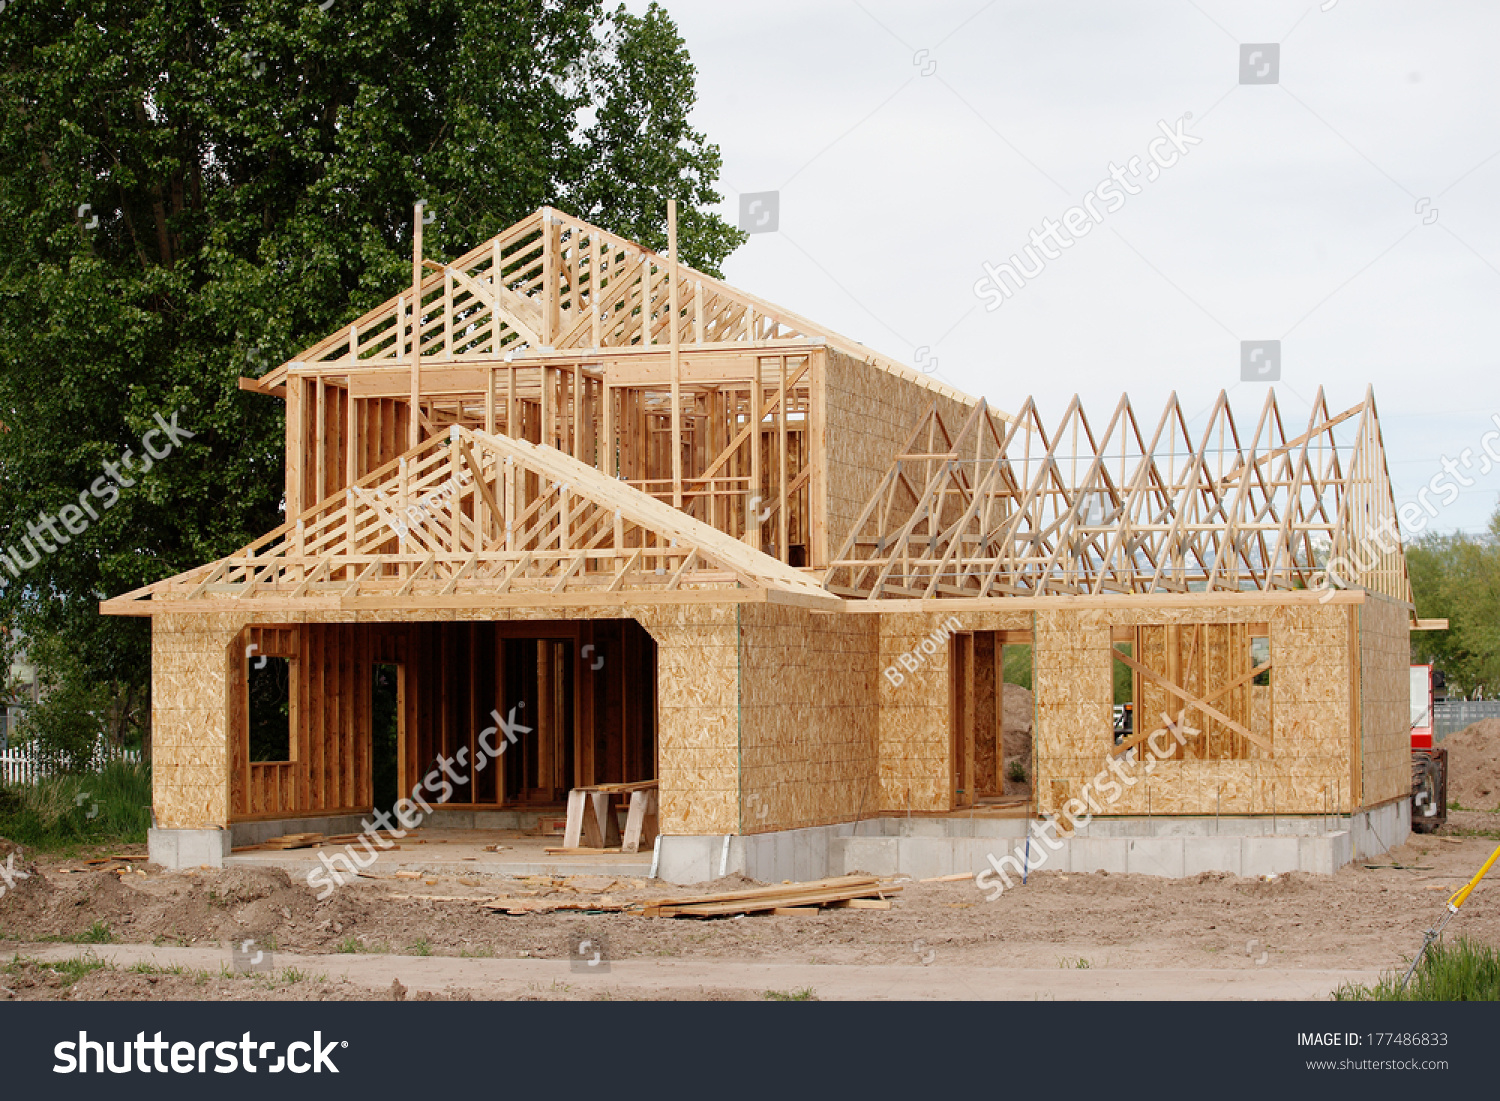 New Stick Built Home Under Construction Stock Photo 177486833 | Shutterstock